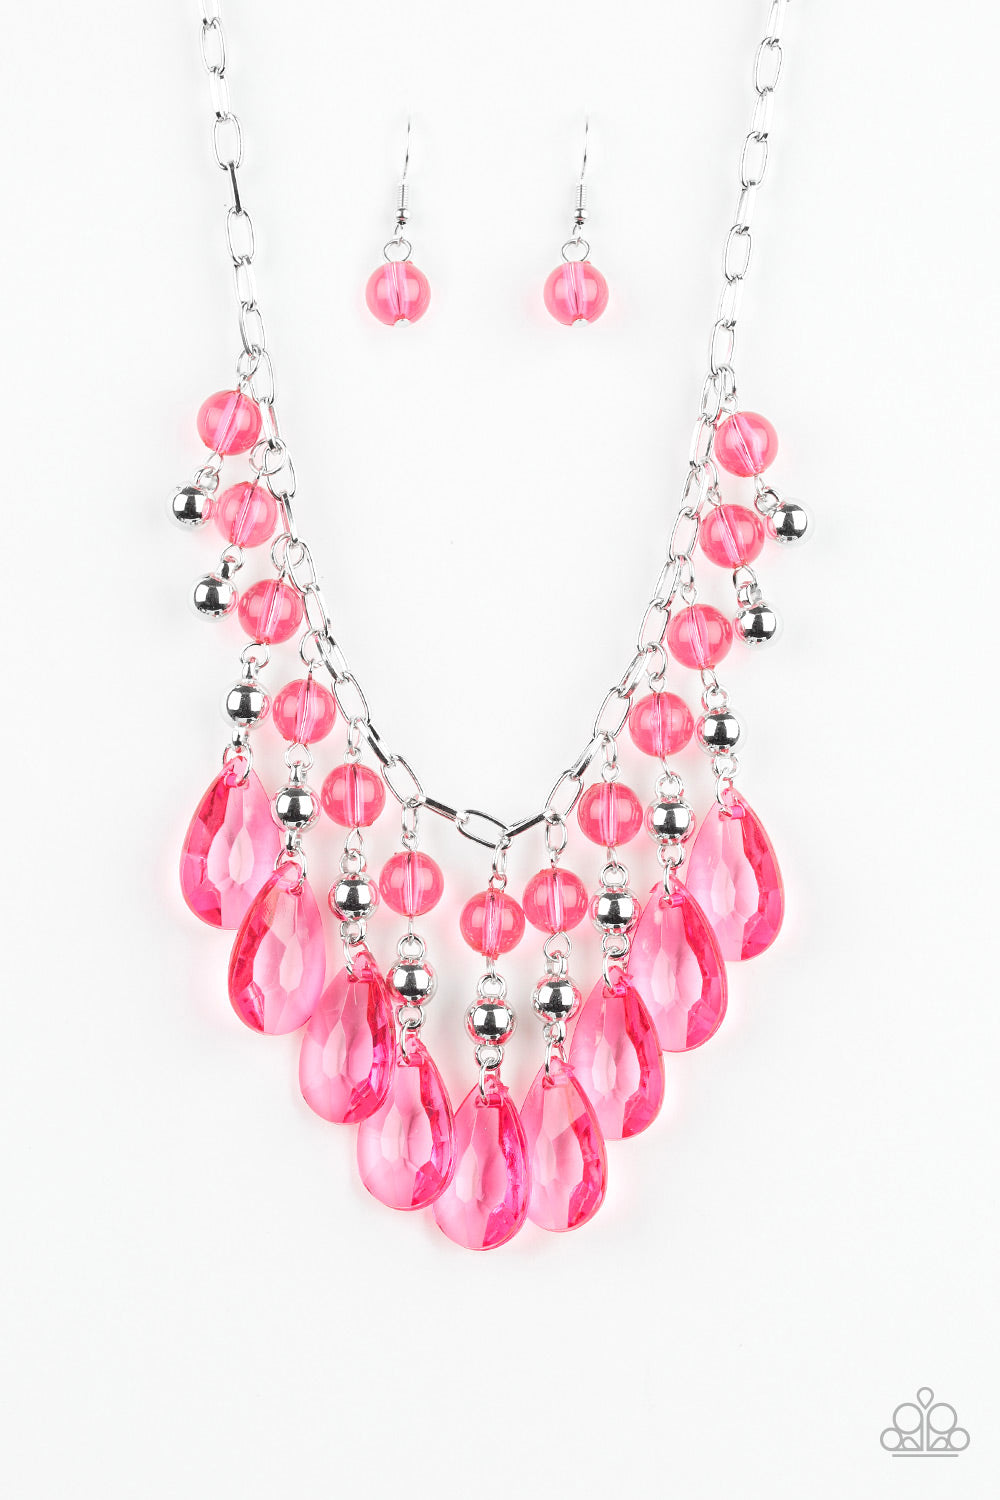 Beauty School Drop Out Pink Paparazzi Necklaces Cashmere Pink Jewels - Cashmere Pink Jewels & Accessories, Cashmere Pink Jewels & Accessories - Paparazzi